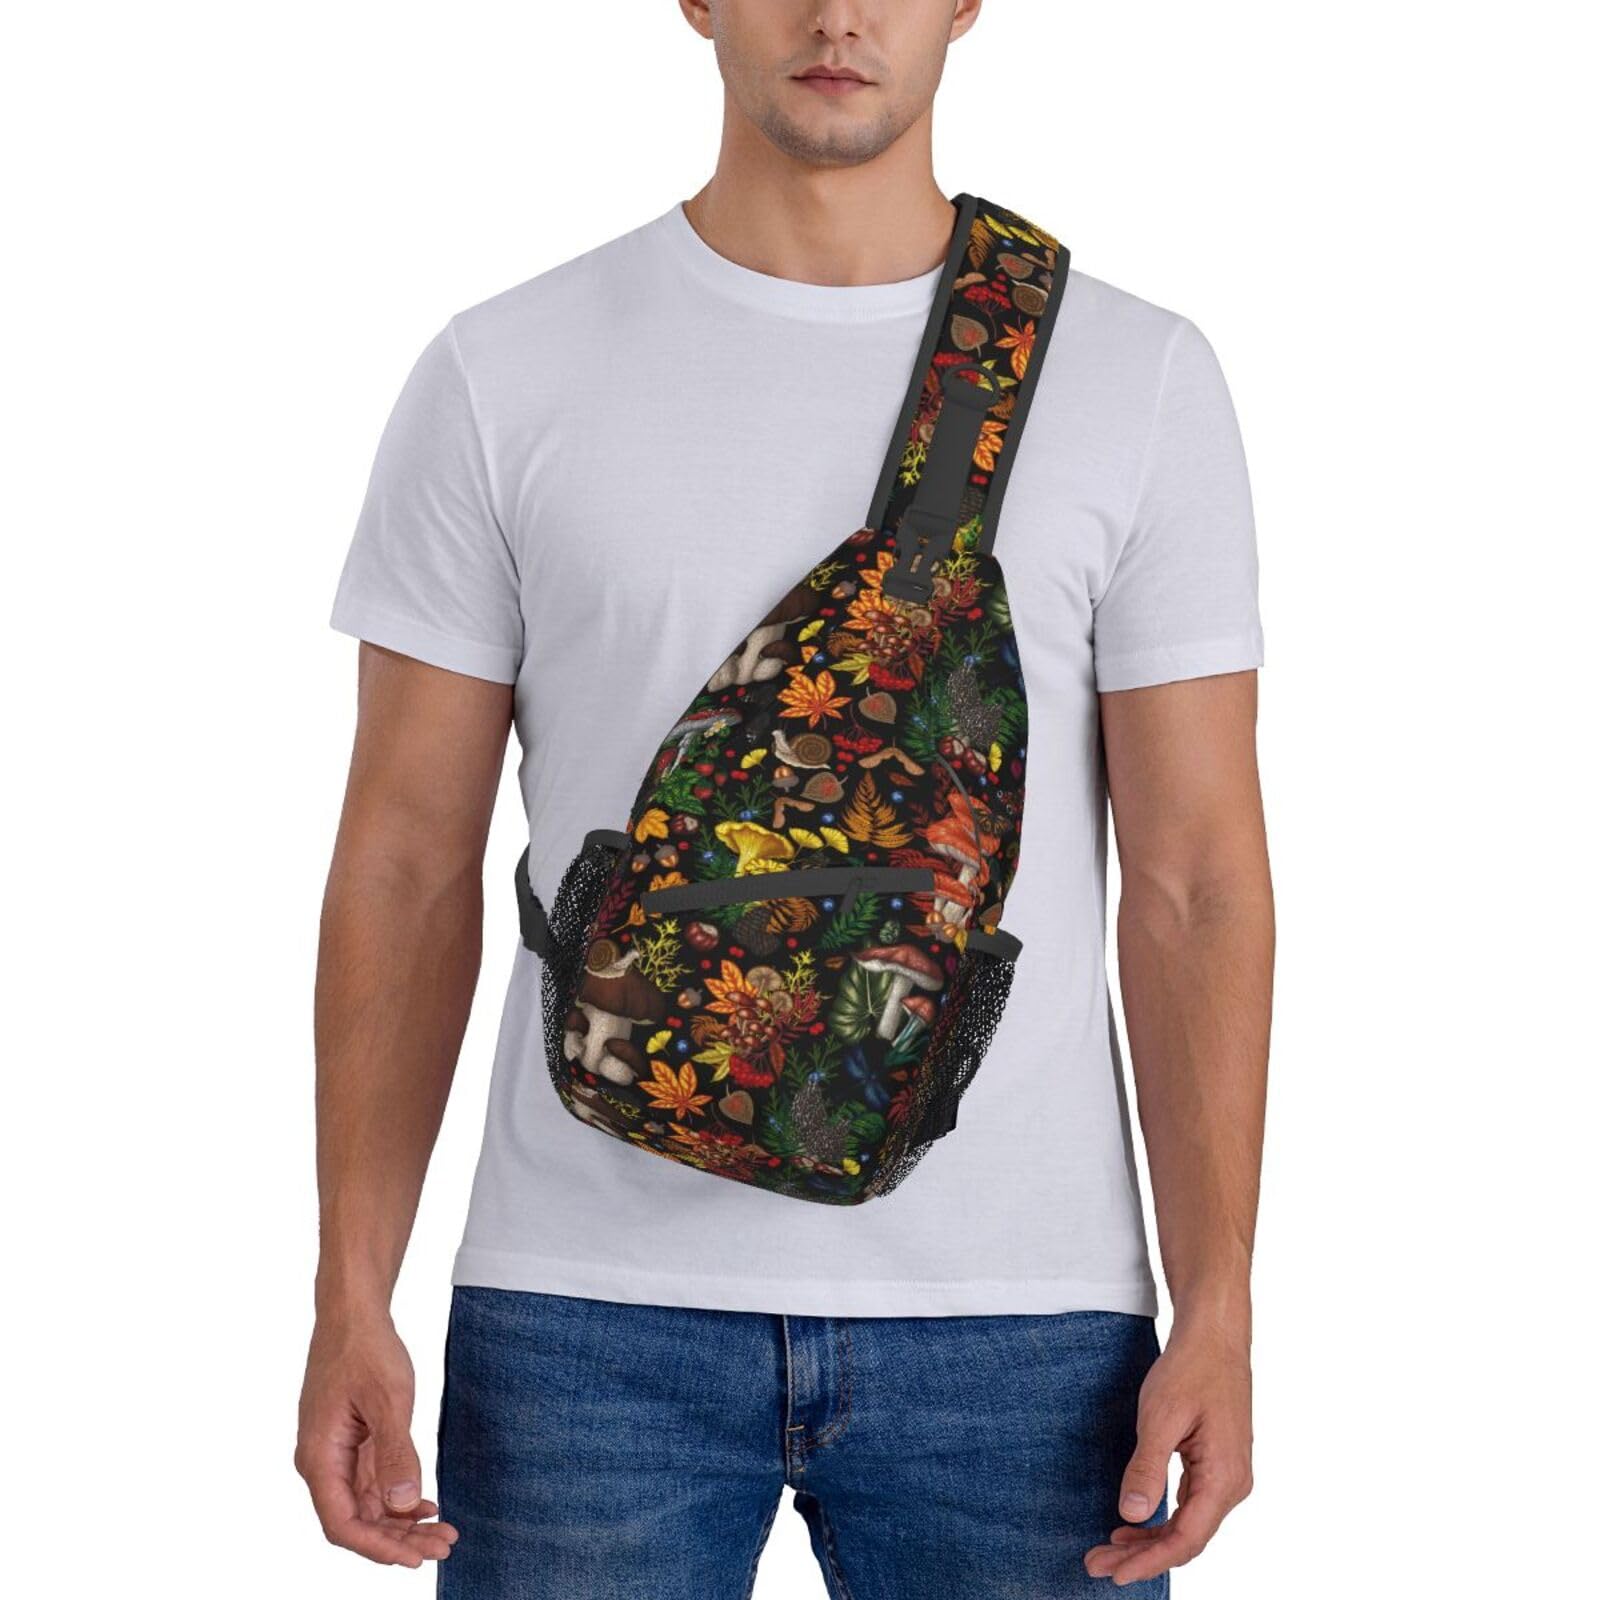 Qceqkul Mushroom Sling Bag Women Men Multifunction Sling Backpack Waterprooof with Adjustable Strap Crossbody Bag Travel Hiking